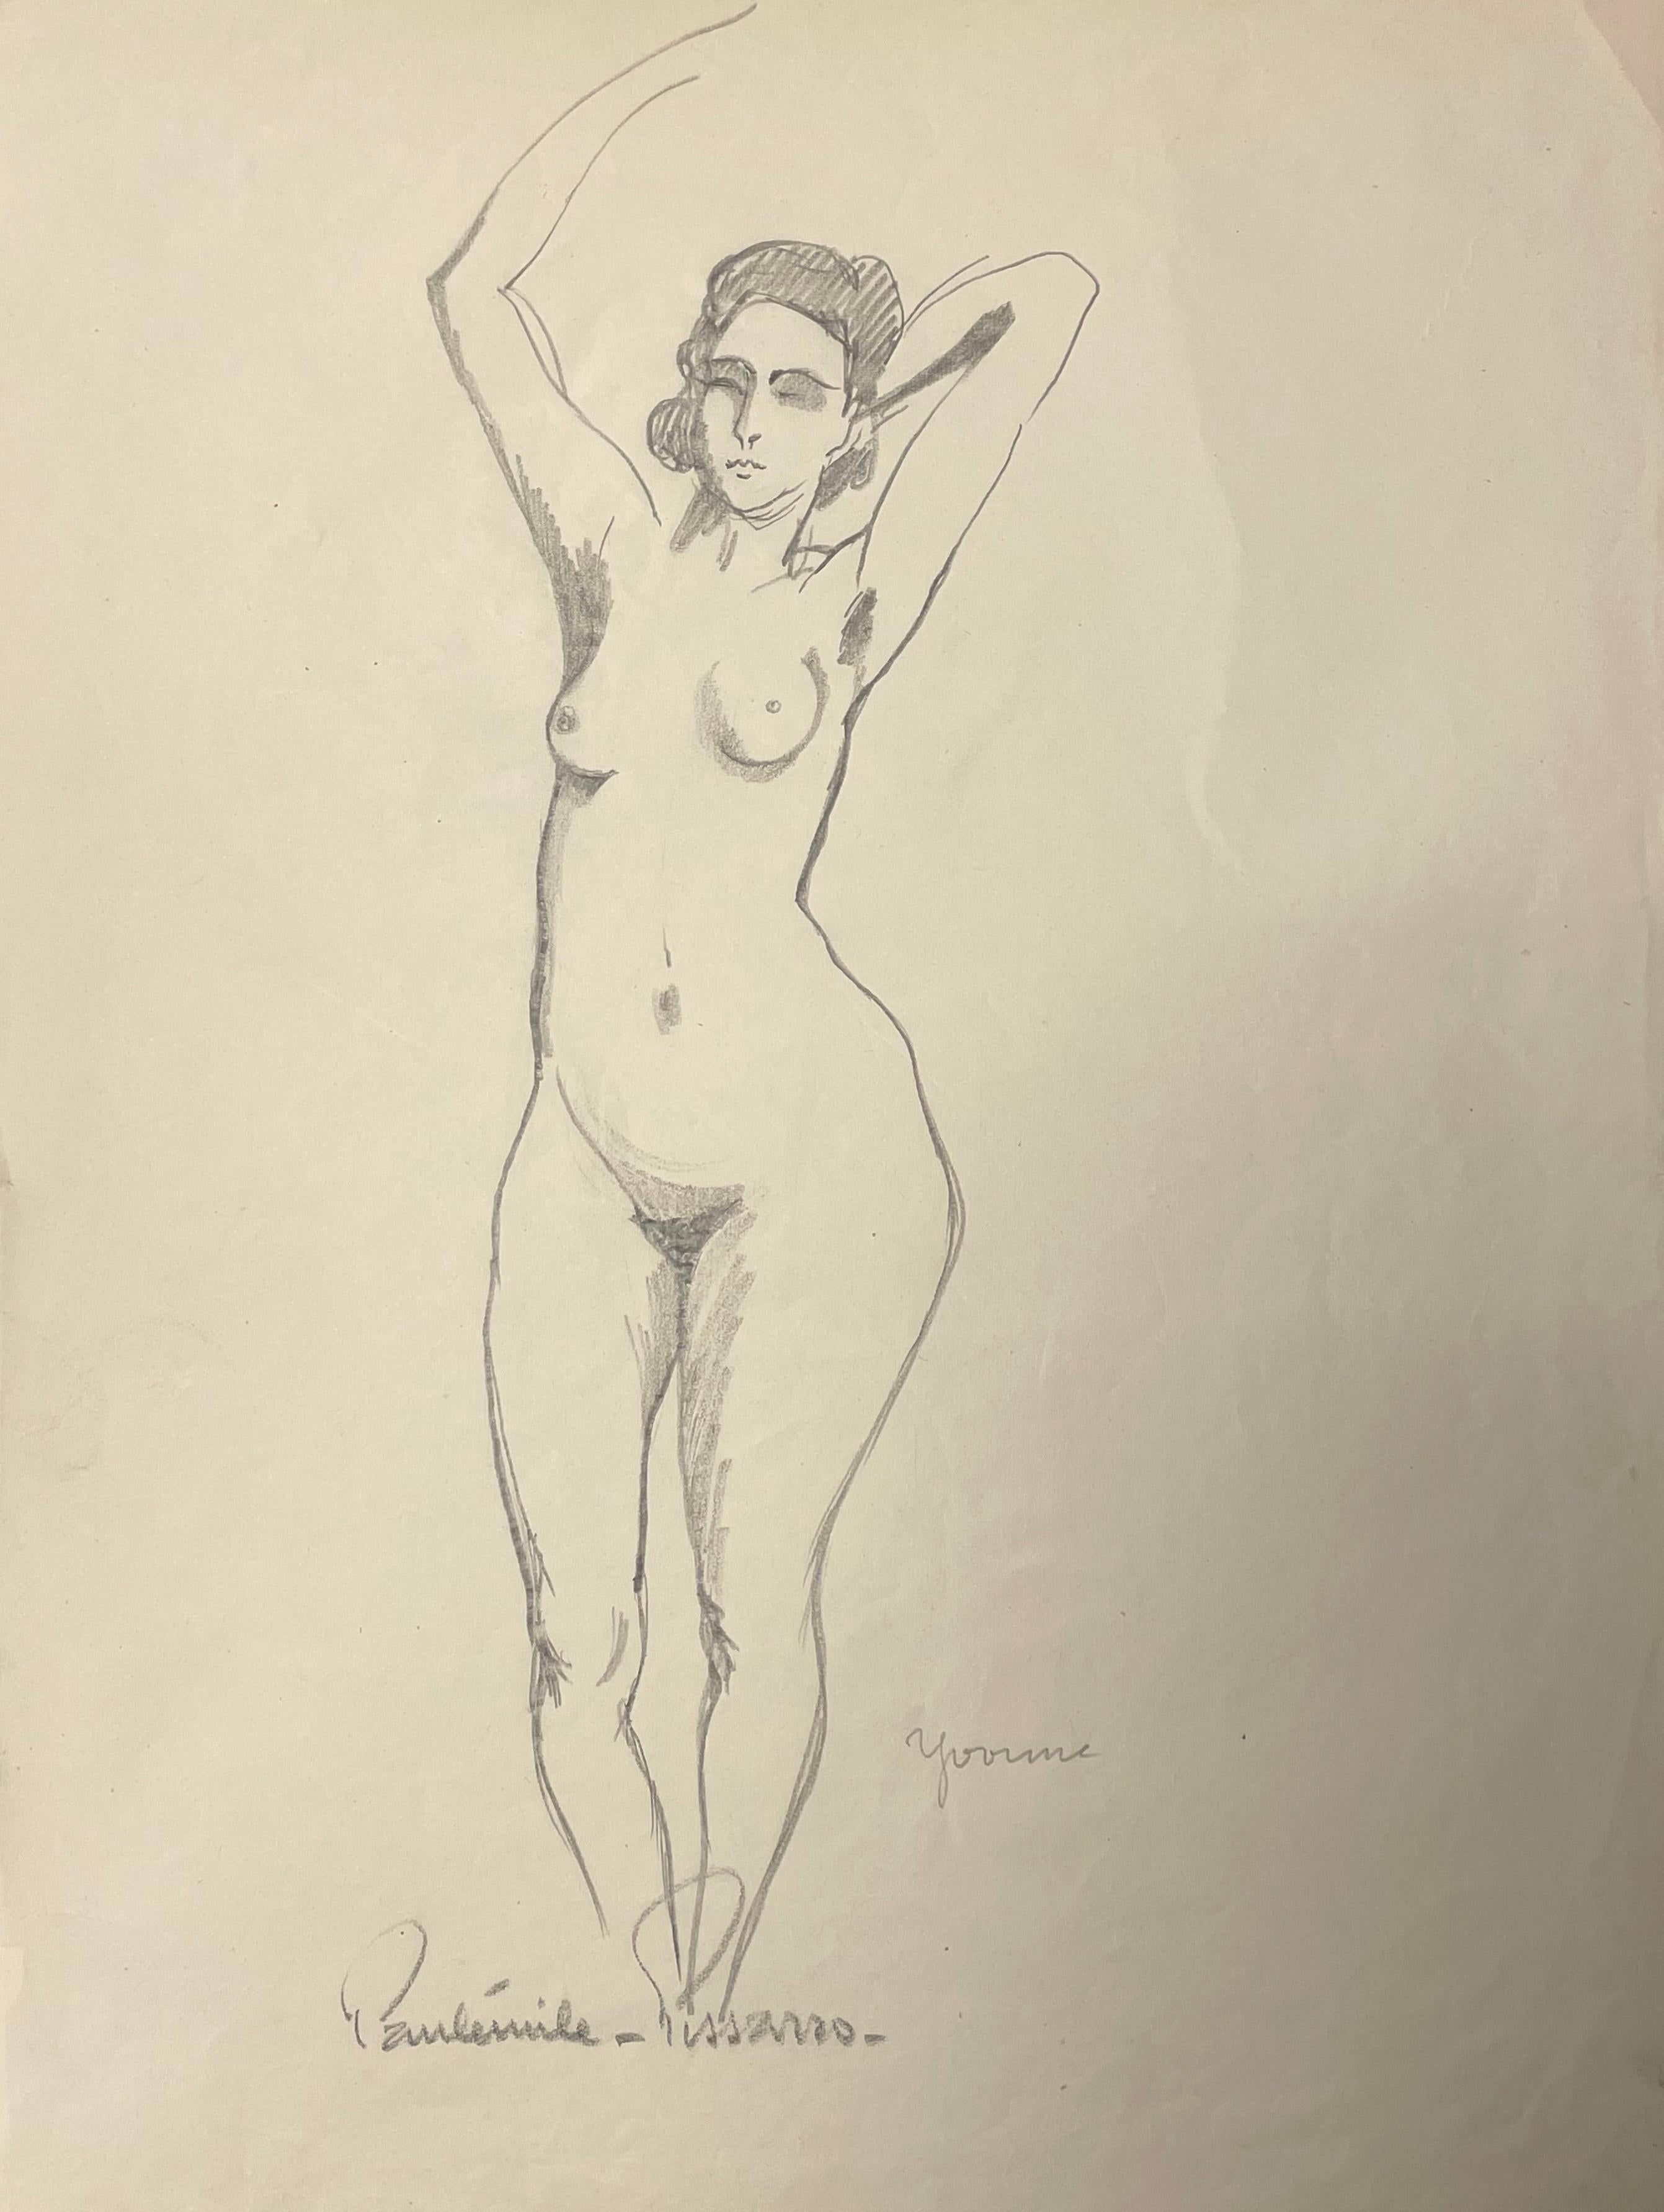 Yvonne debout de Paulémile Pissarro - Dessin de nu de la femme de l'artiste